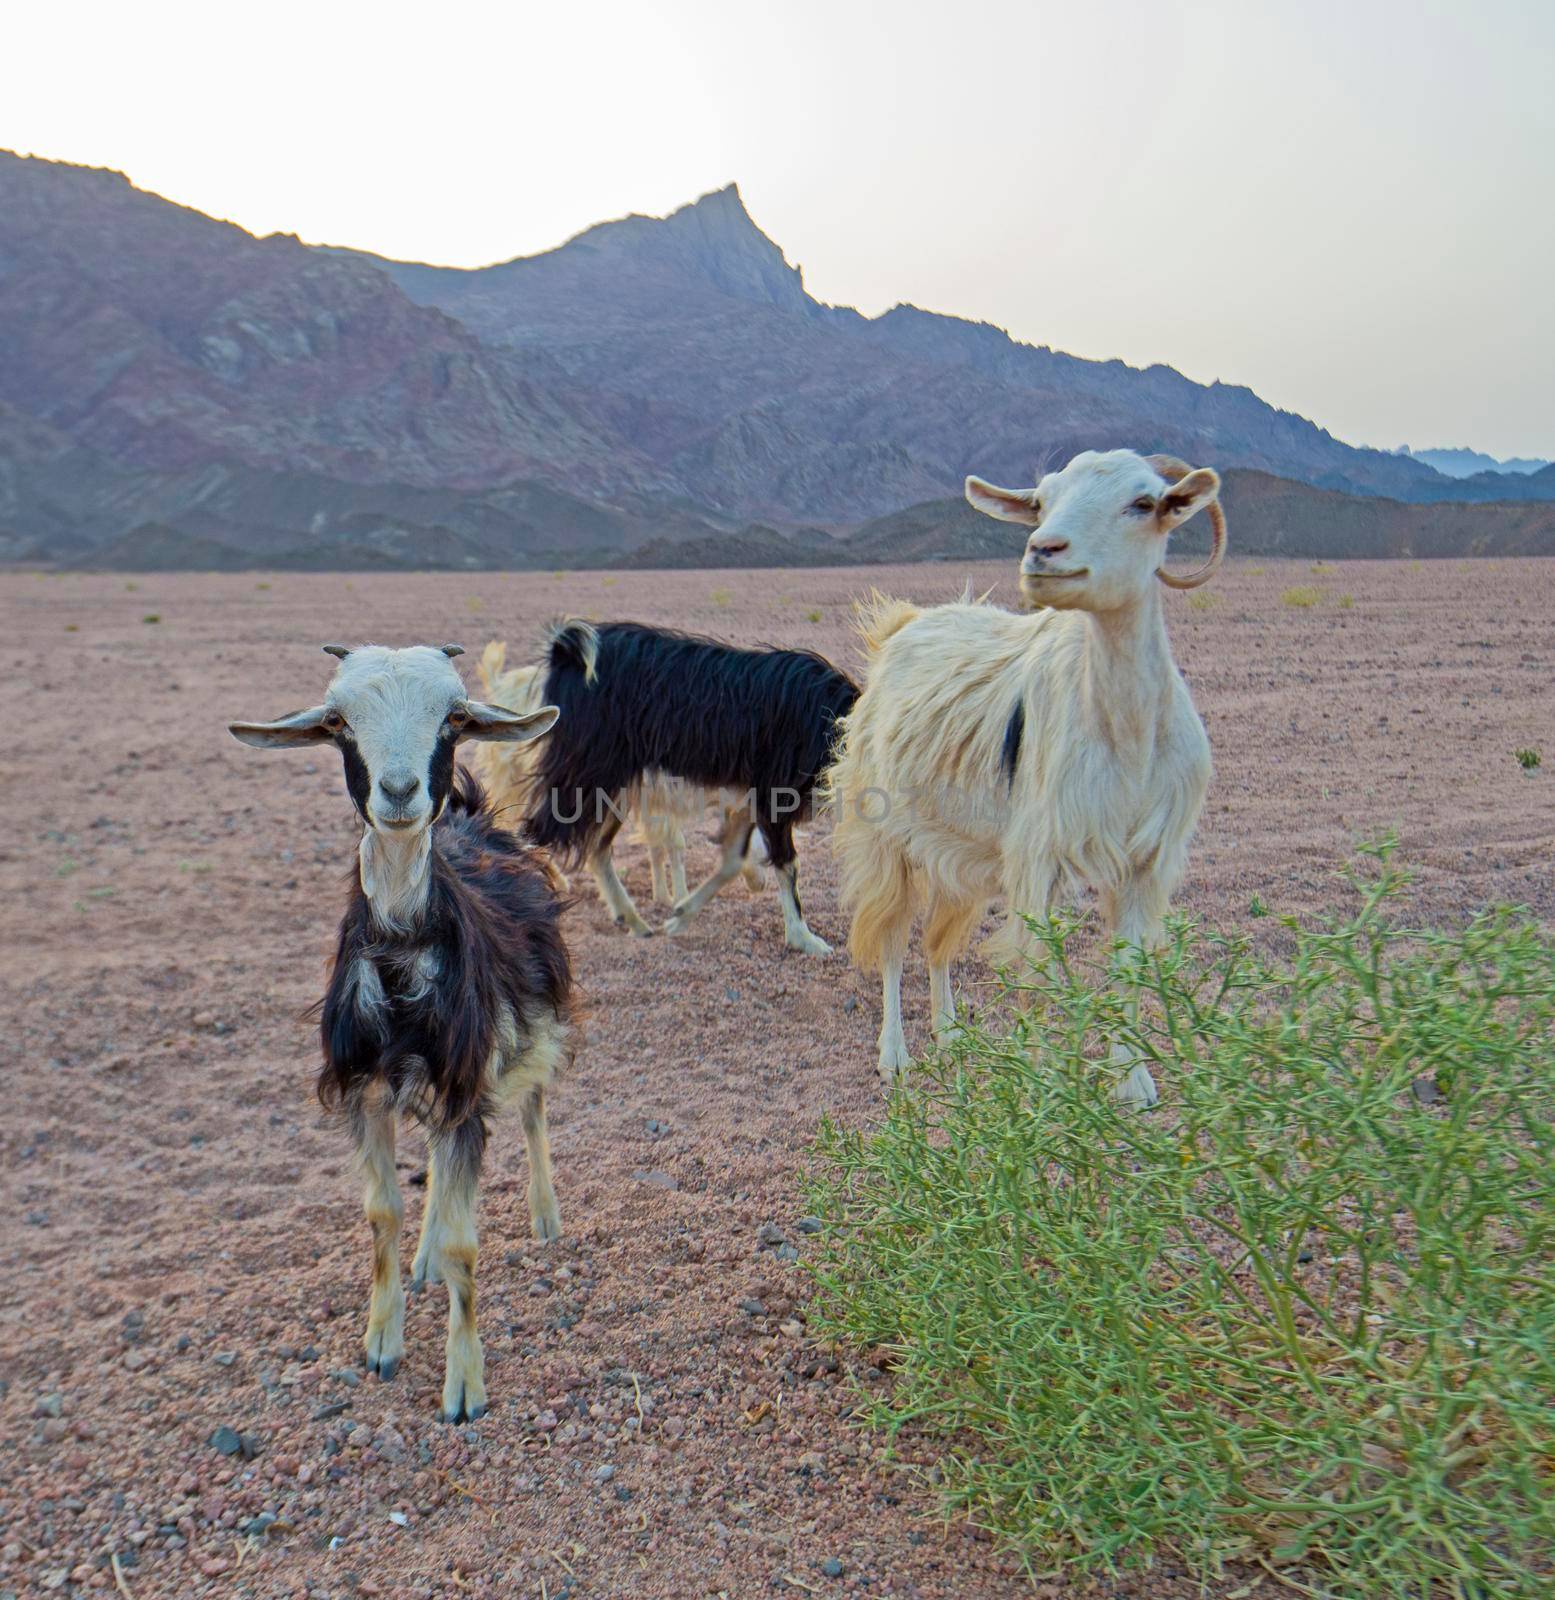 Barren desert landscape in hot climate with sheep by paulvinten